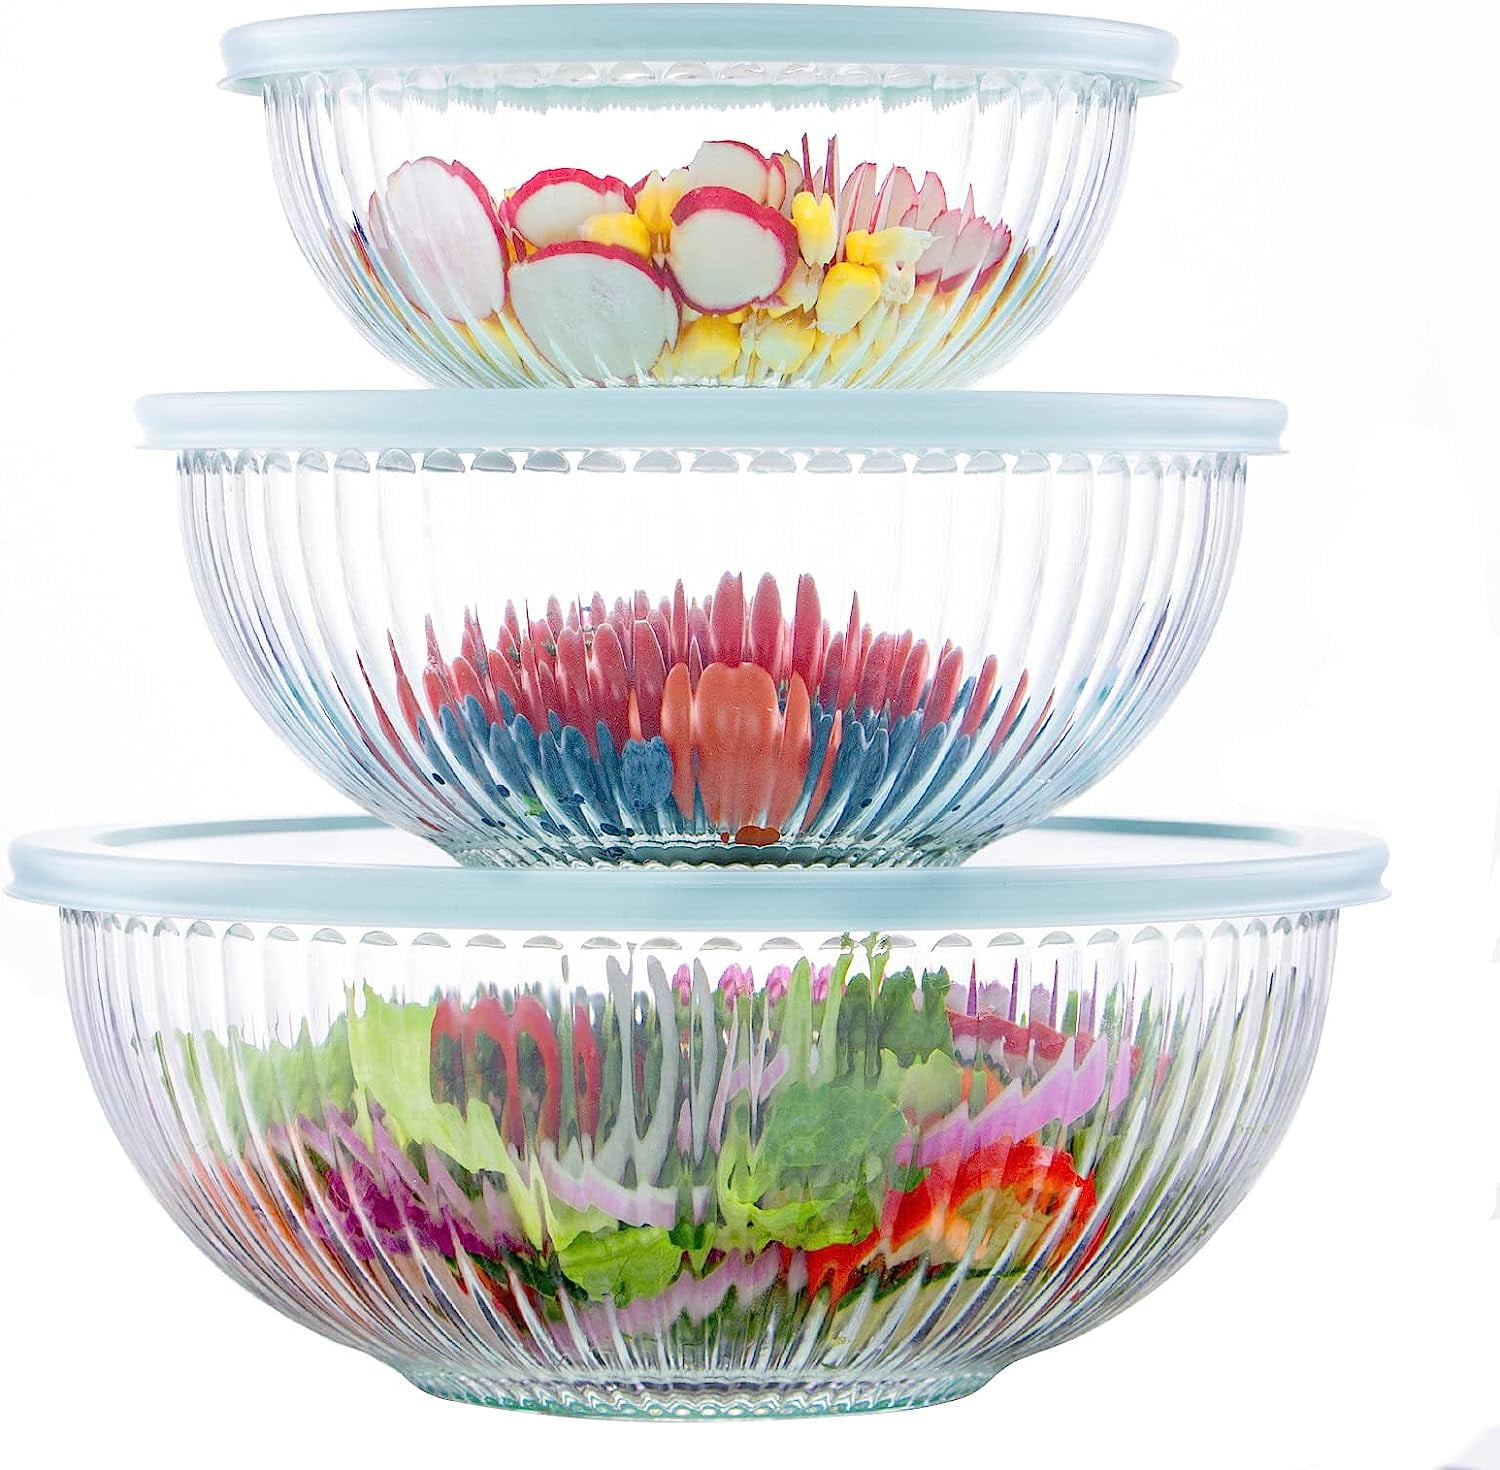 Borosilicate Glass Nesting Mixing Bowls 3 Pack